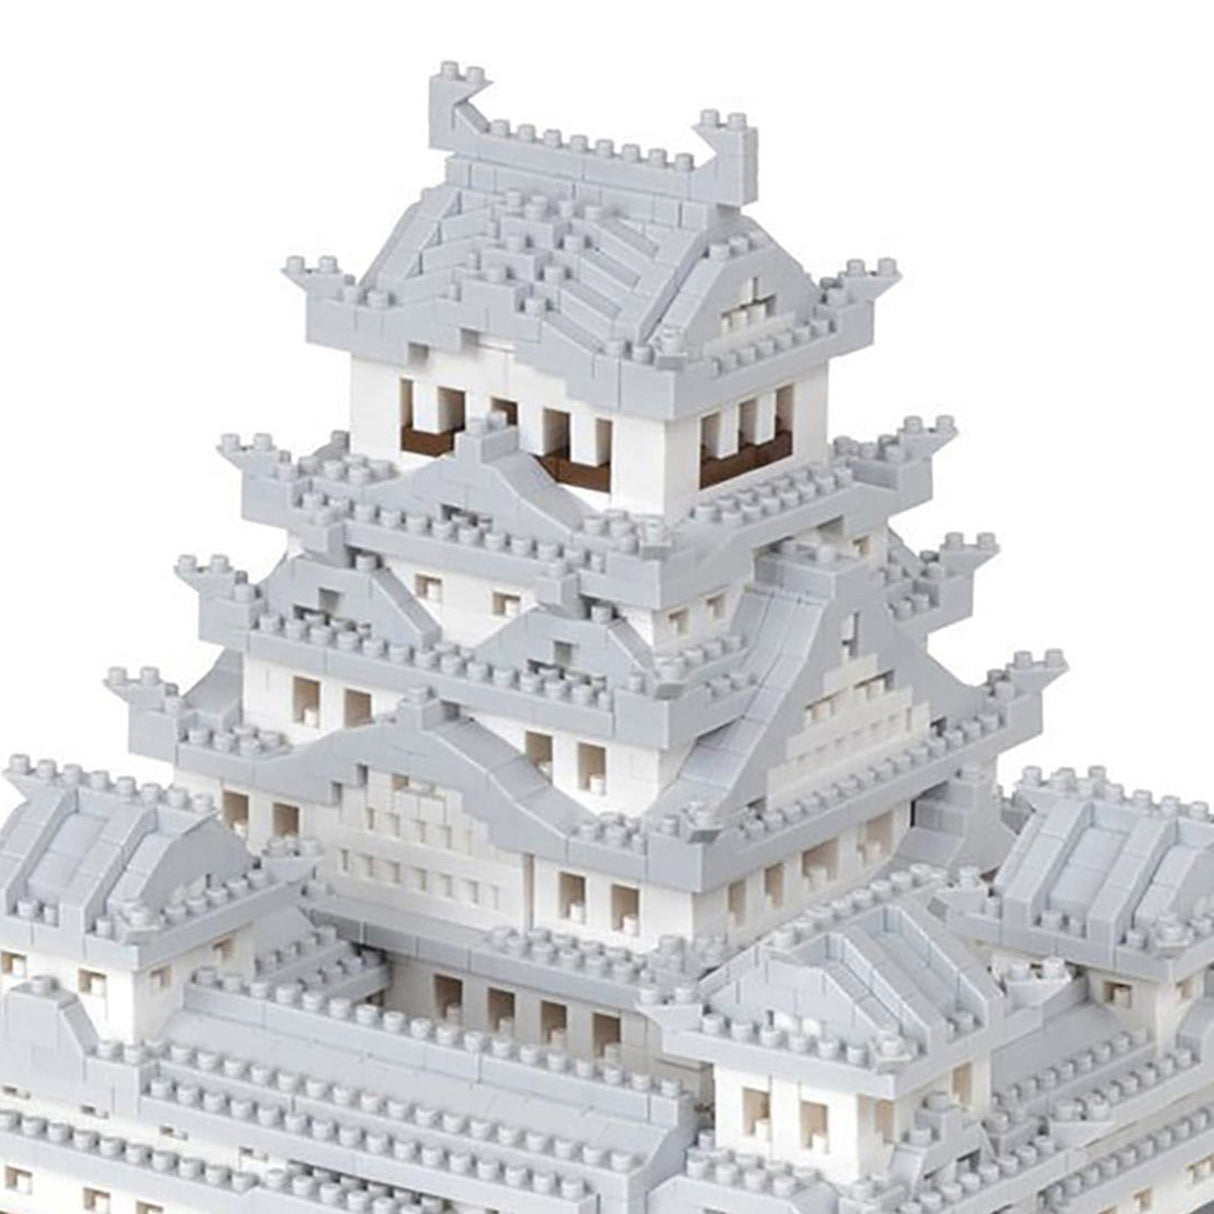 nanoBlock Himeji Castle Deluxe Edition (2750 pieces)